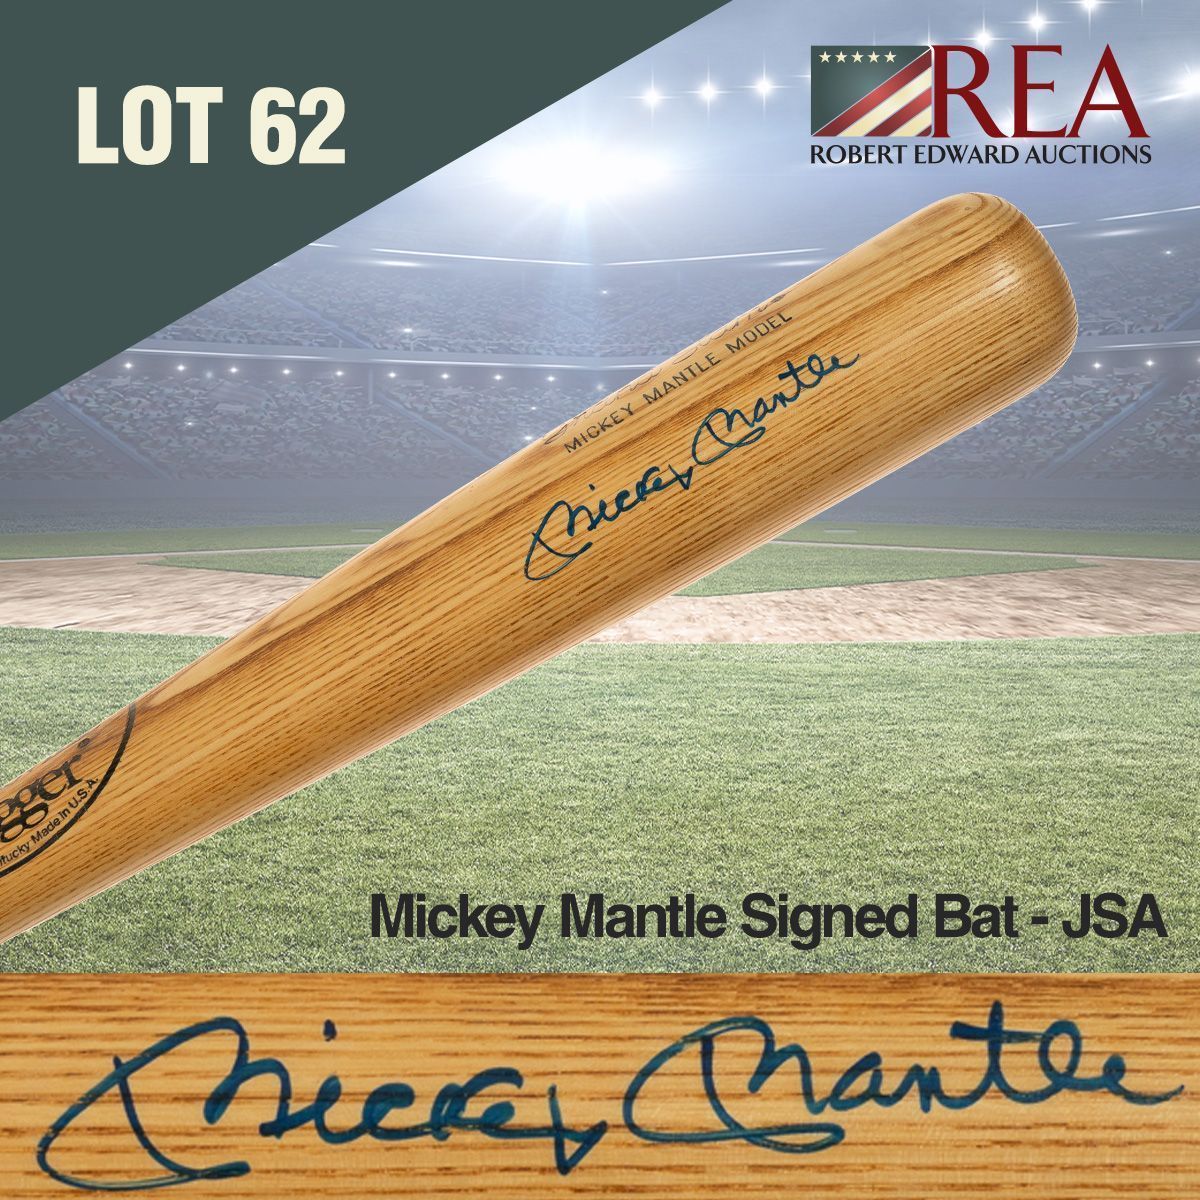 May Encore Auction Spotlight: Lot # 62: Mickey Mantle Signed Bat - JSA Bid Now: buff.ly/2C5lKo4

@reaonline #baseballmemorabilia #signedbaseballbat #auction #thehobby #collector #whodoyoucollect #Yankees